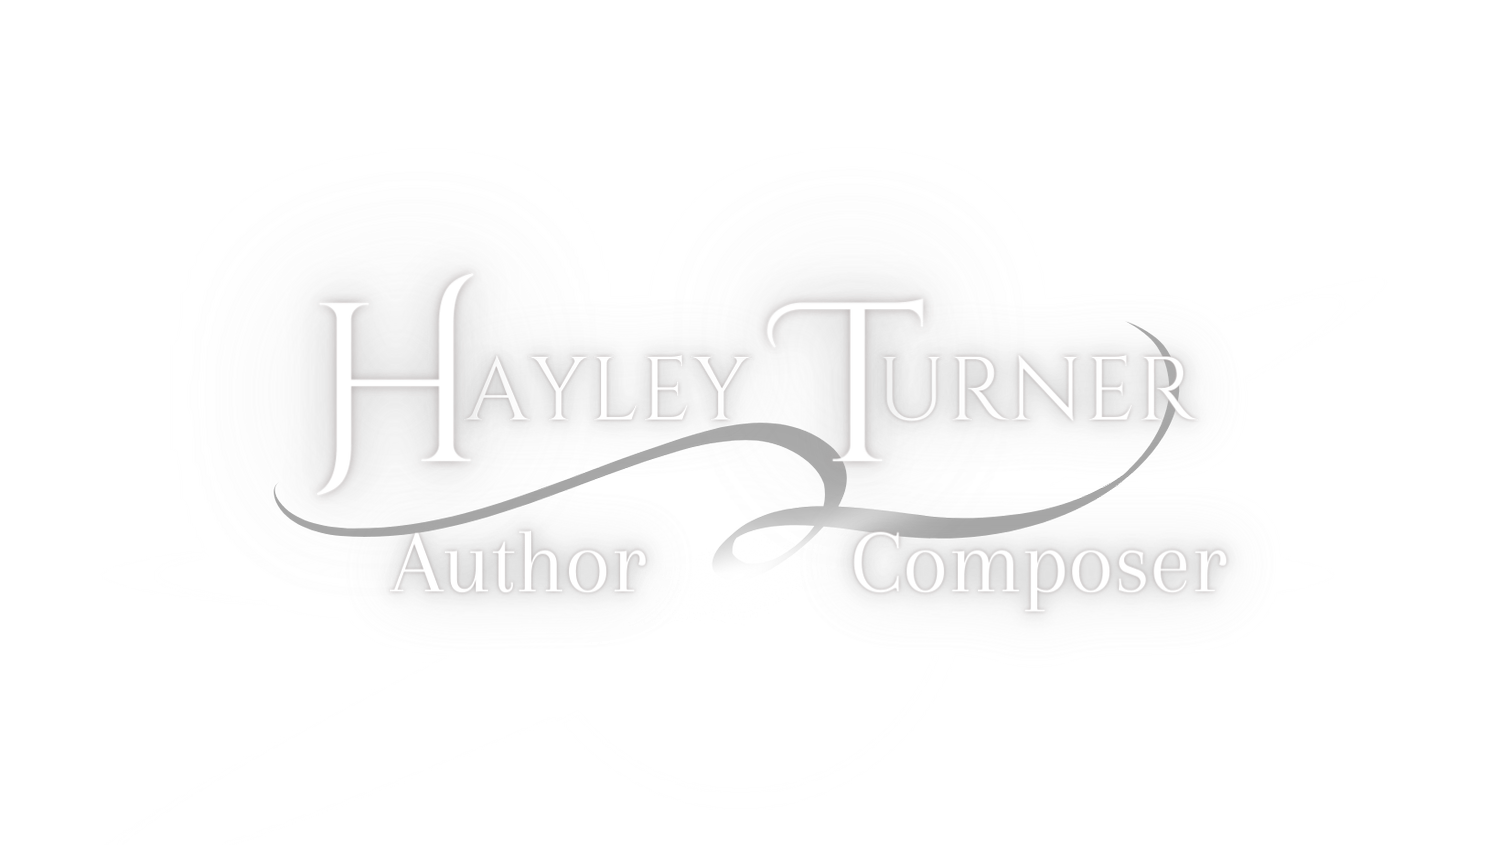 Hayley Turner, Author